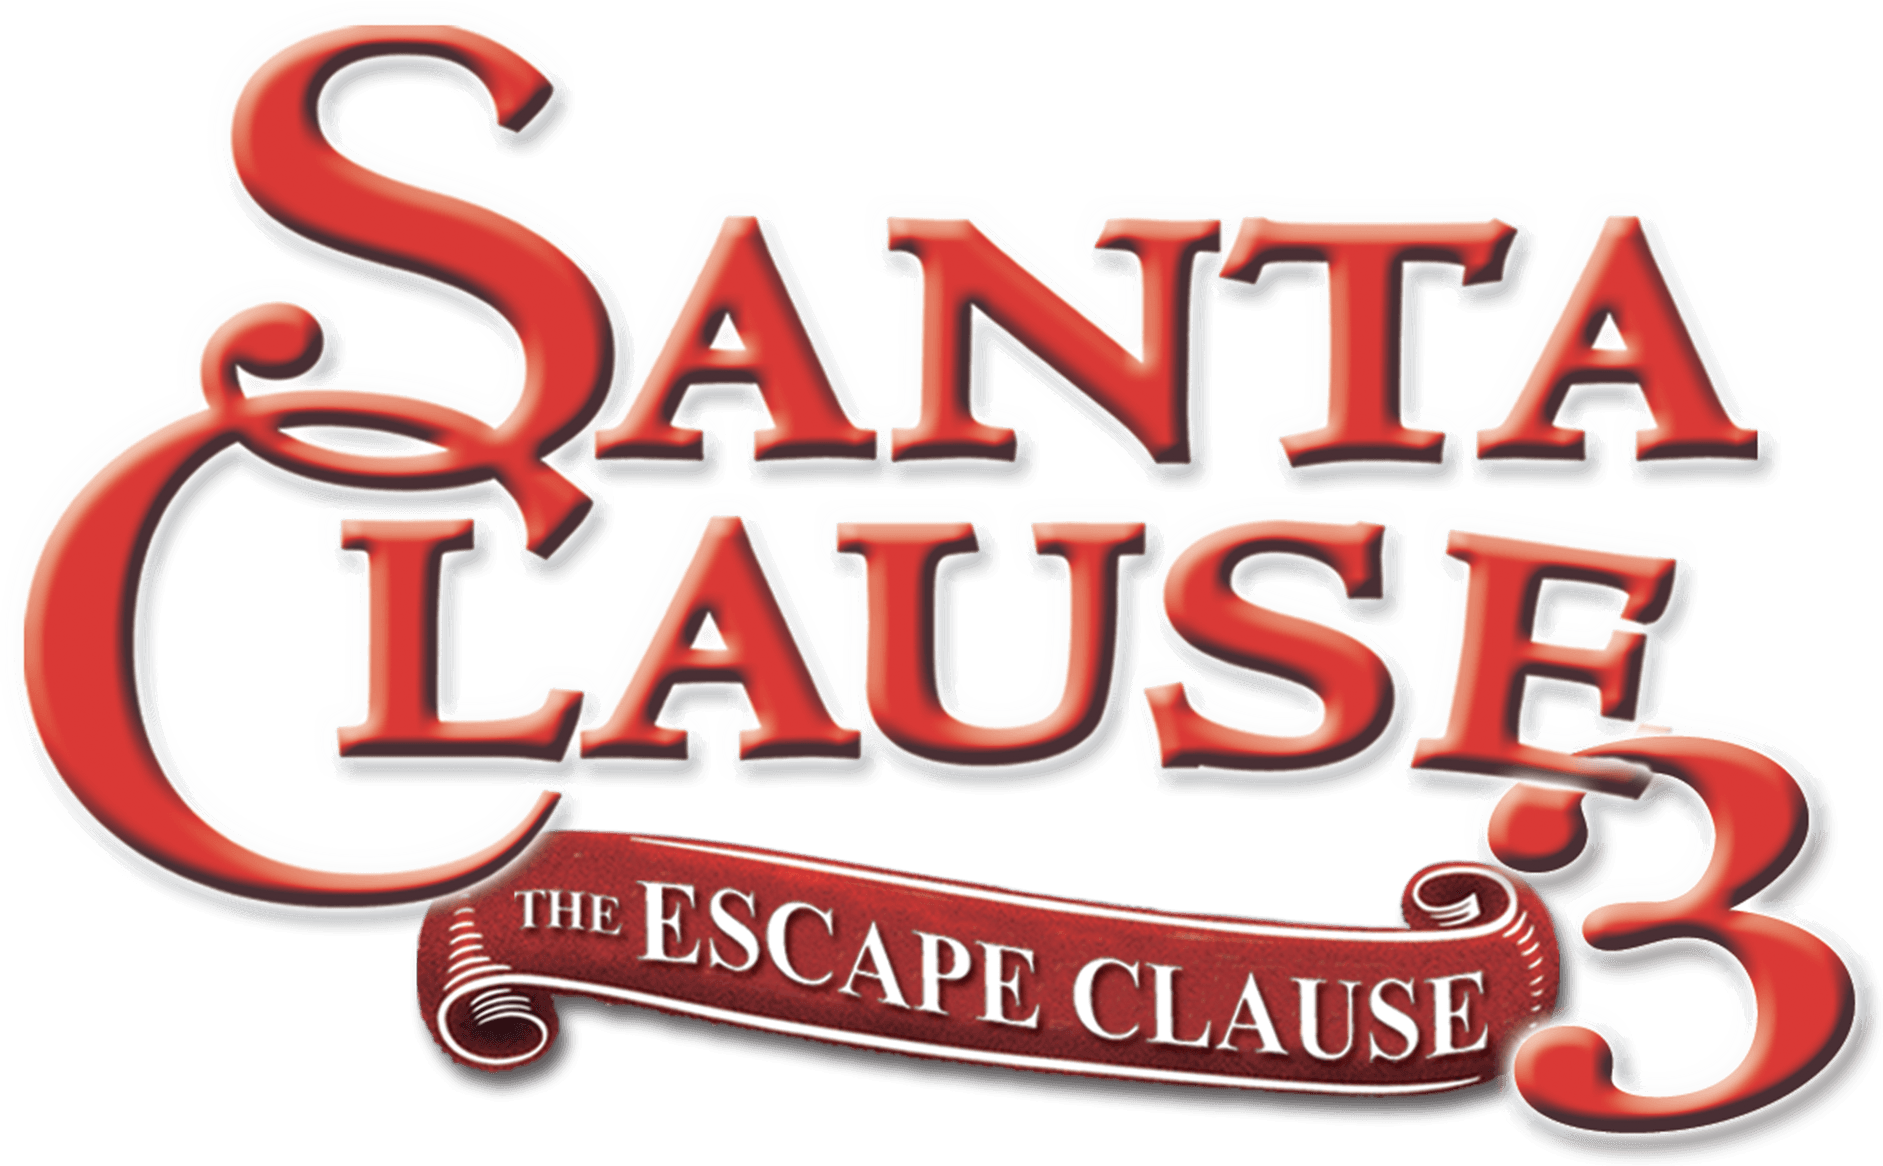 The Santa Clause 3: The Escape Clause logo